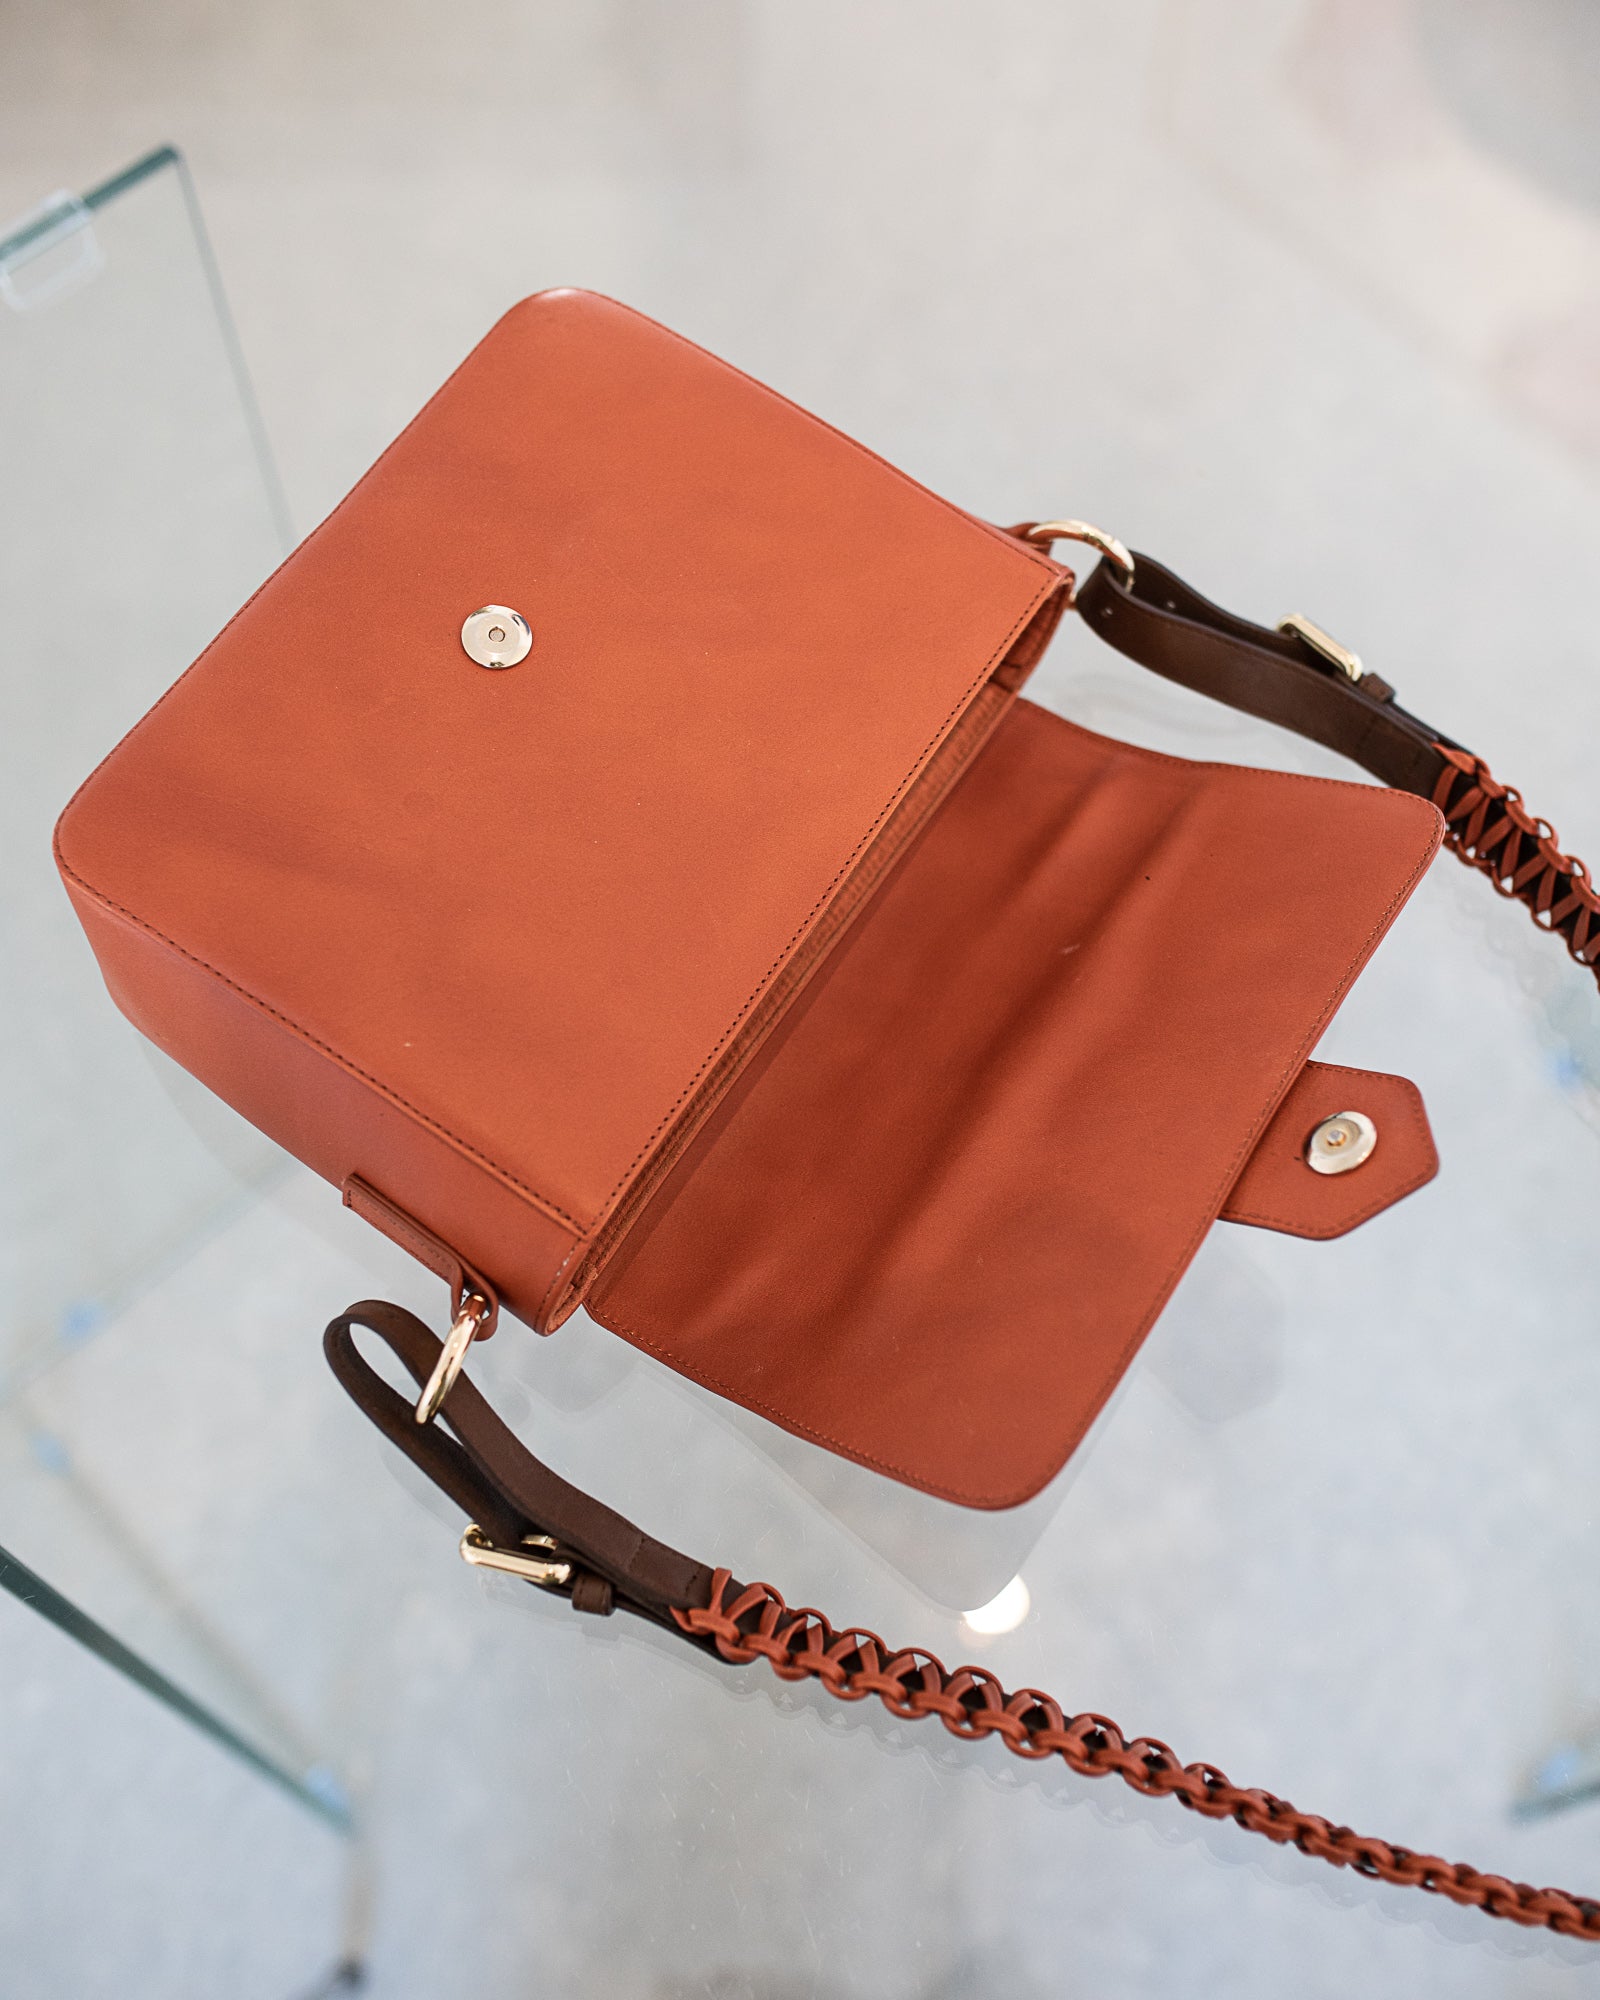 Blankens The Madeira bag leather orange/terracotta coloured bag